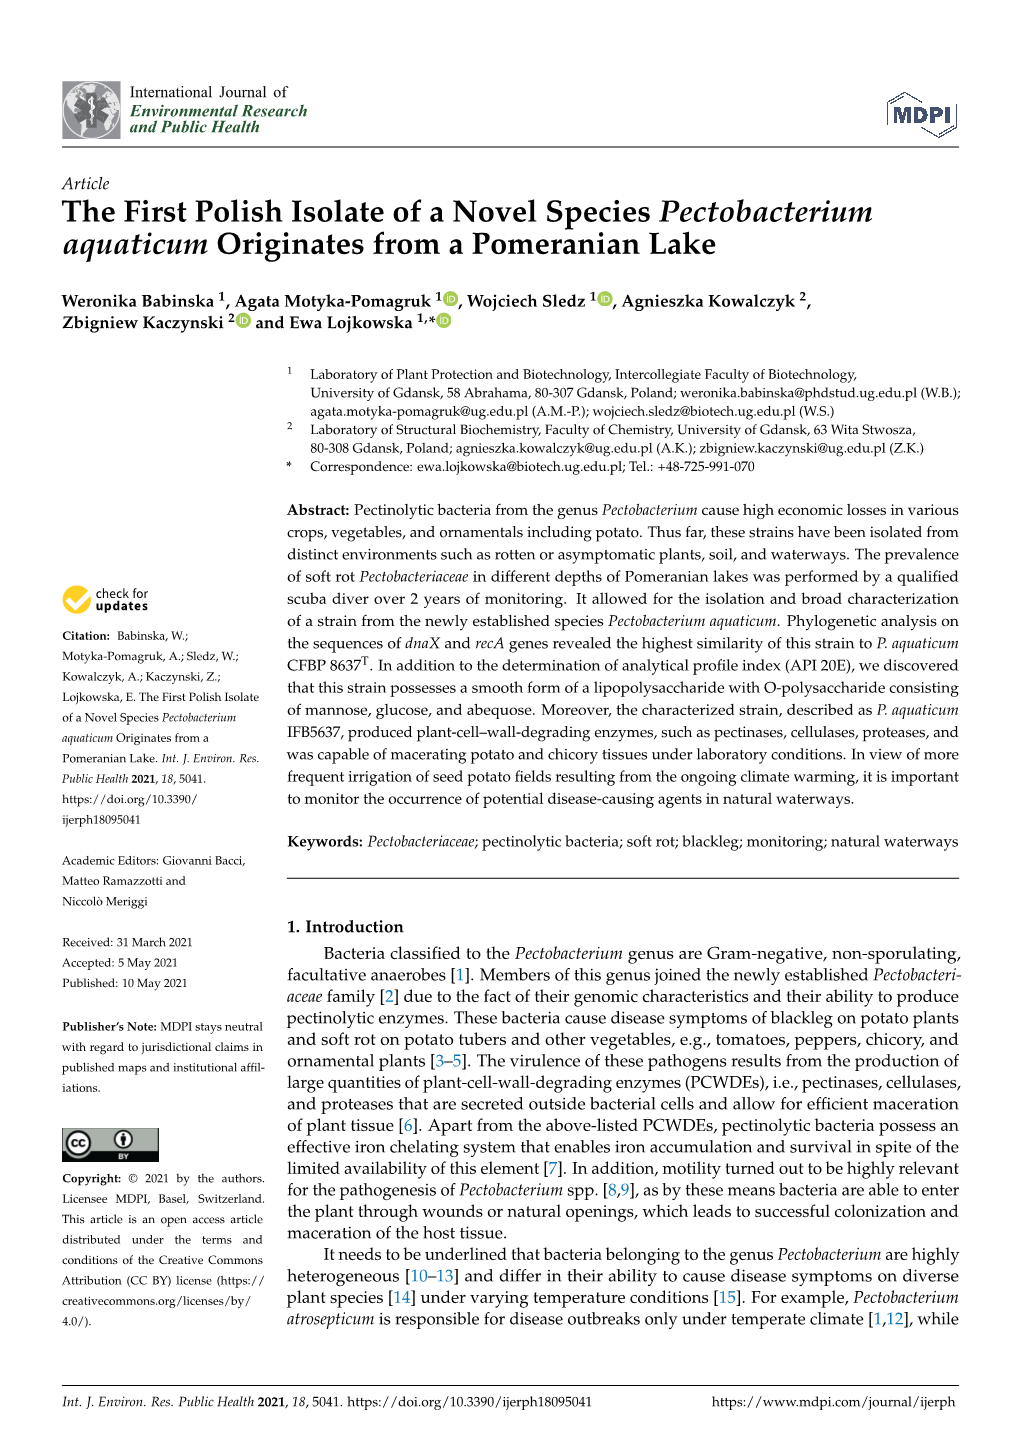 The First Polish Isolate of a Novel Species Pectobacterium Aquaticum Originates from a Pomeranian Lake